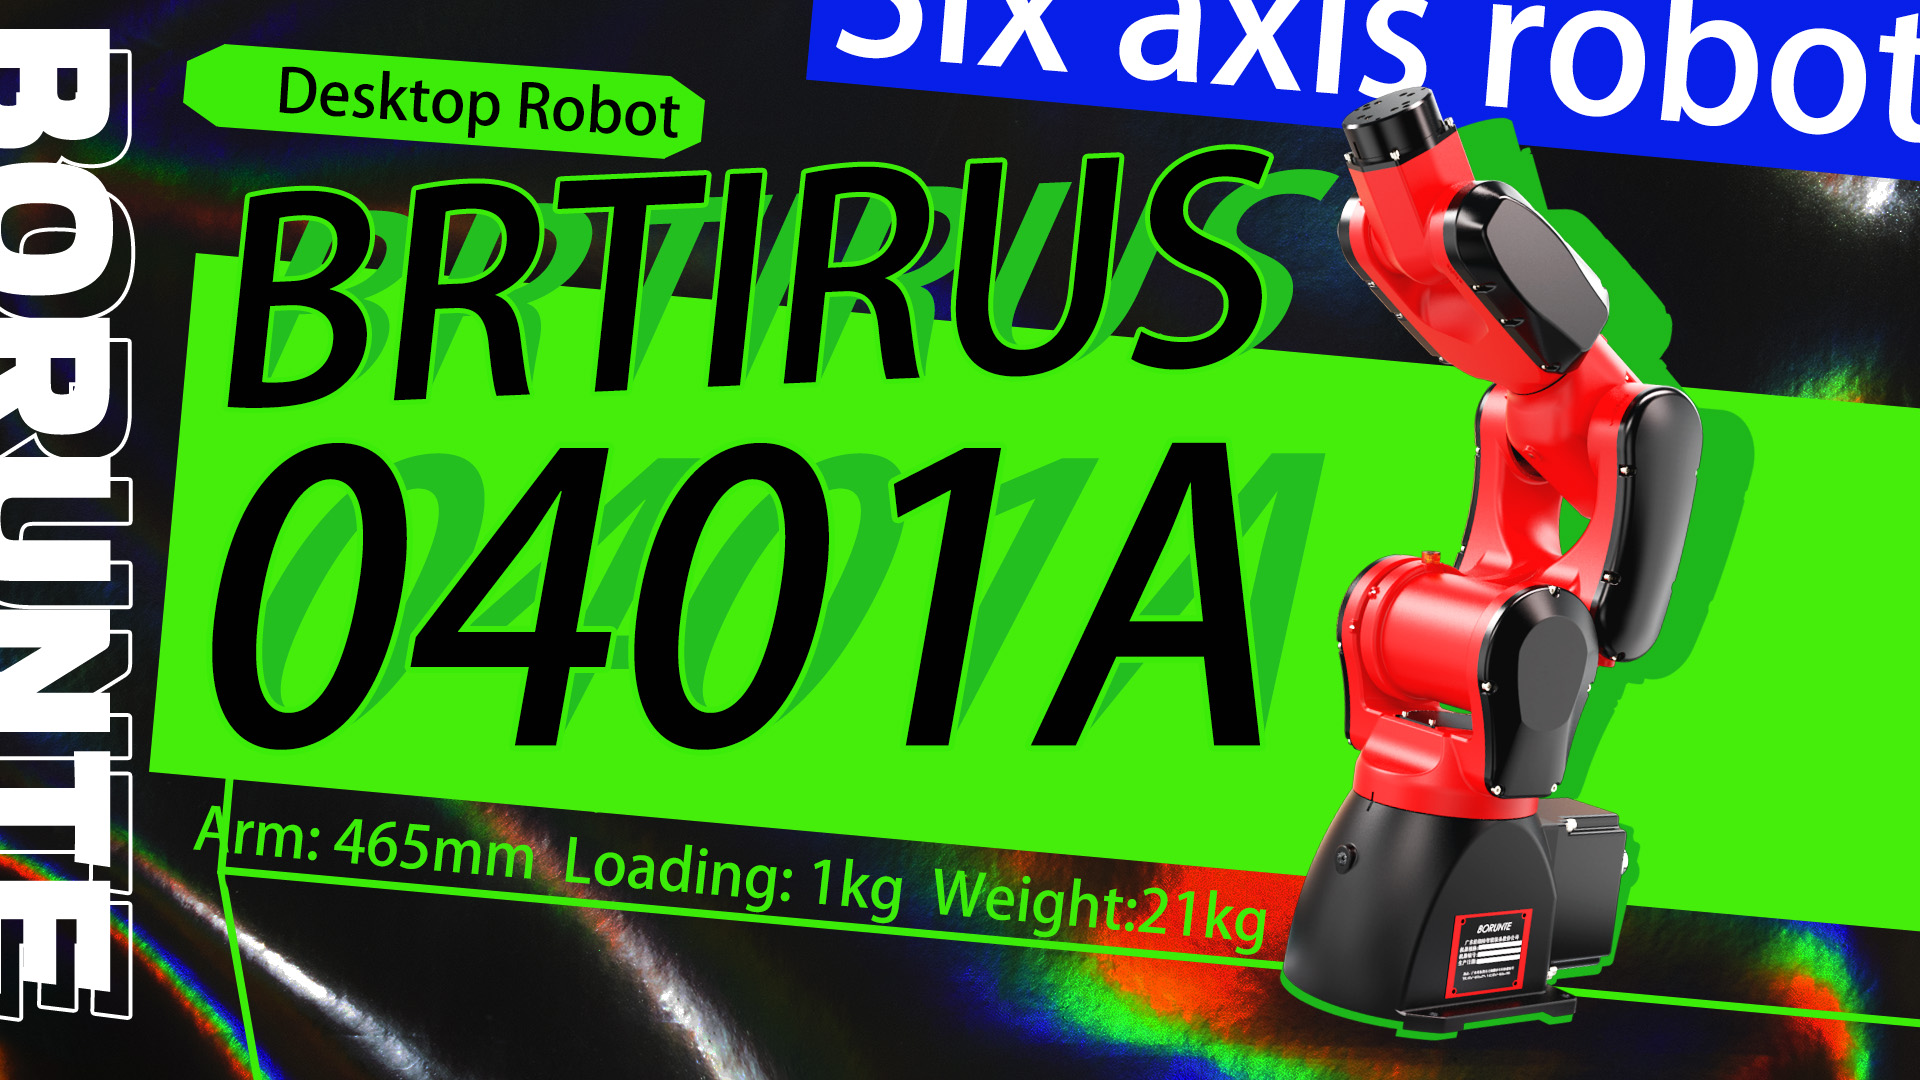 BRTIRUS0401A kiʻi hoʻolauna robot